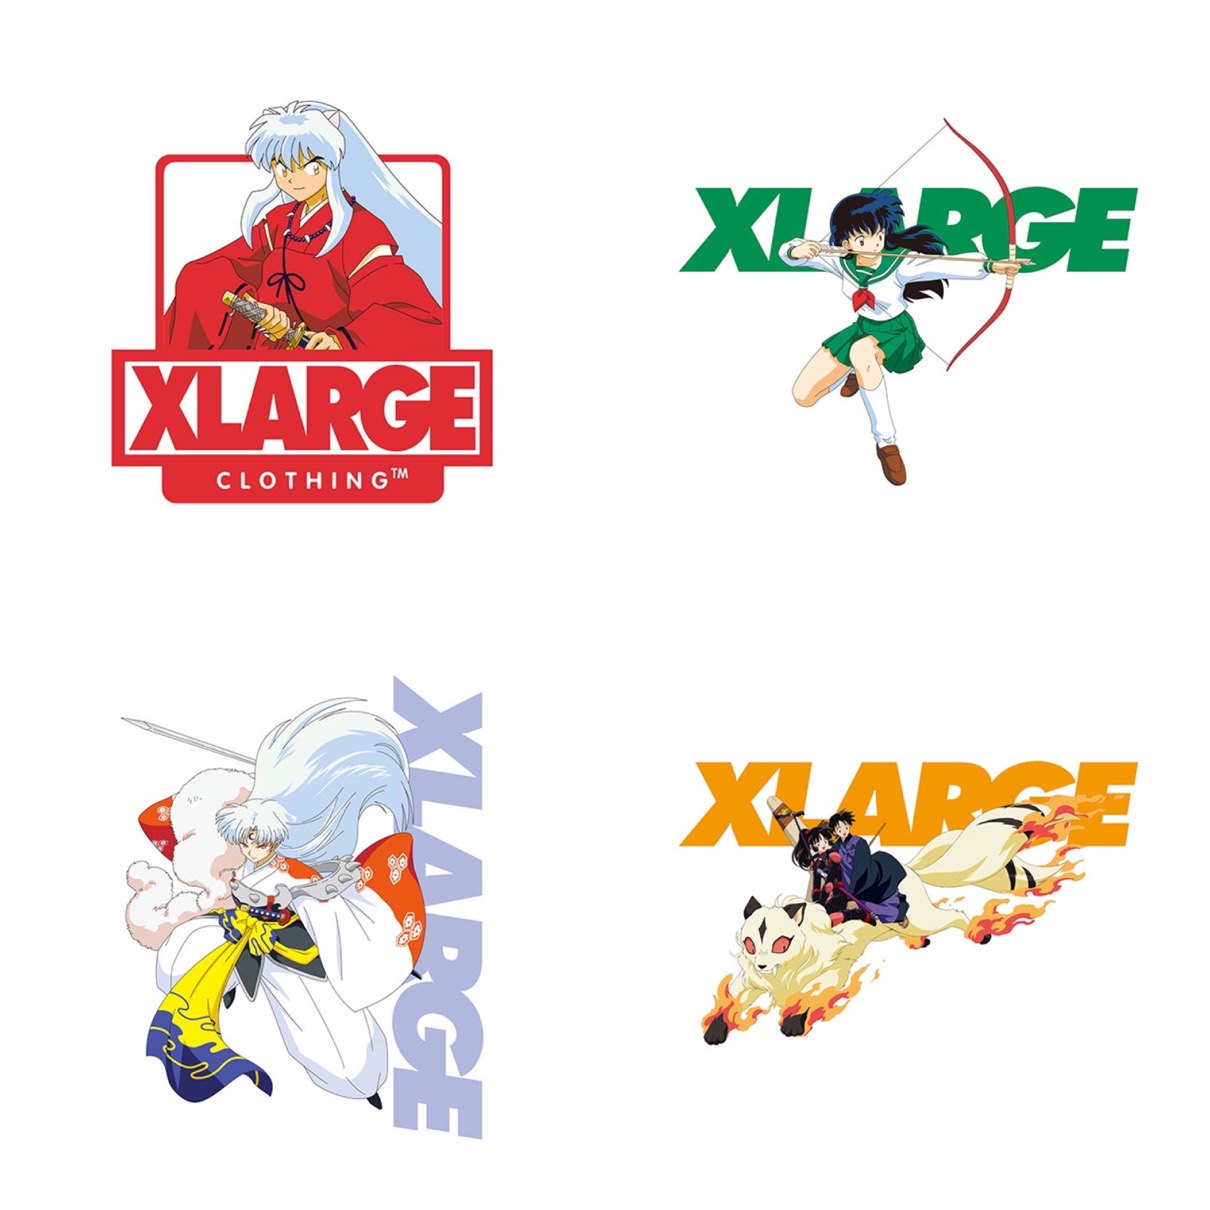 Xlarge 犬夜叉 半妖の夜叉姫 コラボコレクションが国内5月15日に発売予定 Up To Date